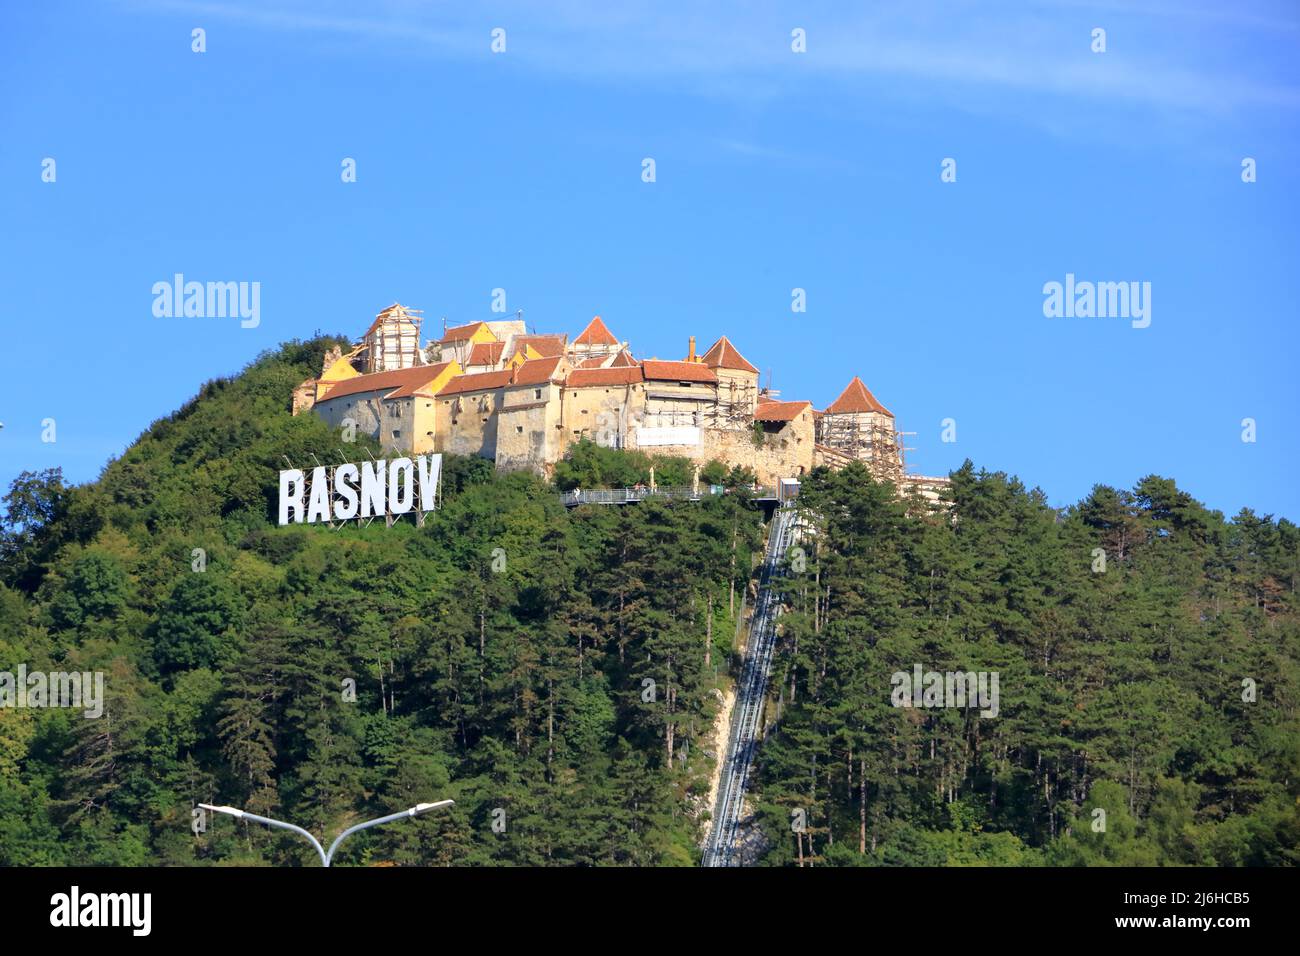 Rasnov in Romania: The Medieval castle, Bauernburg Rosenau Stock Photo